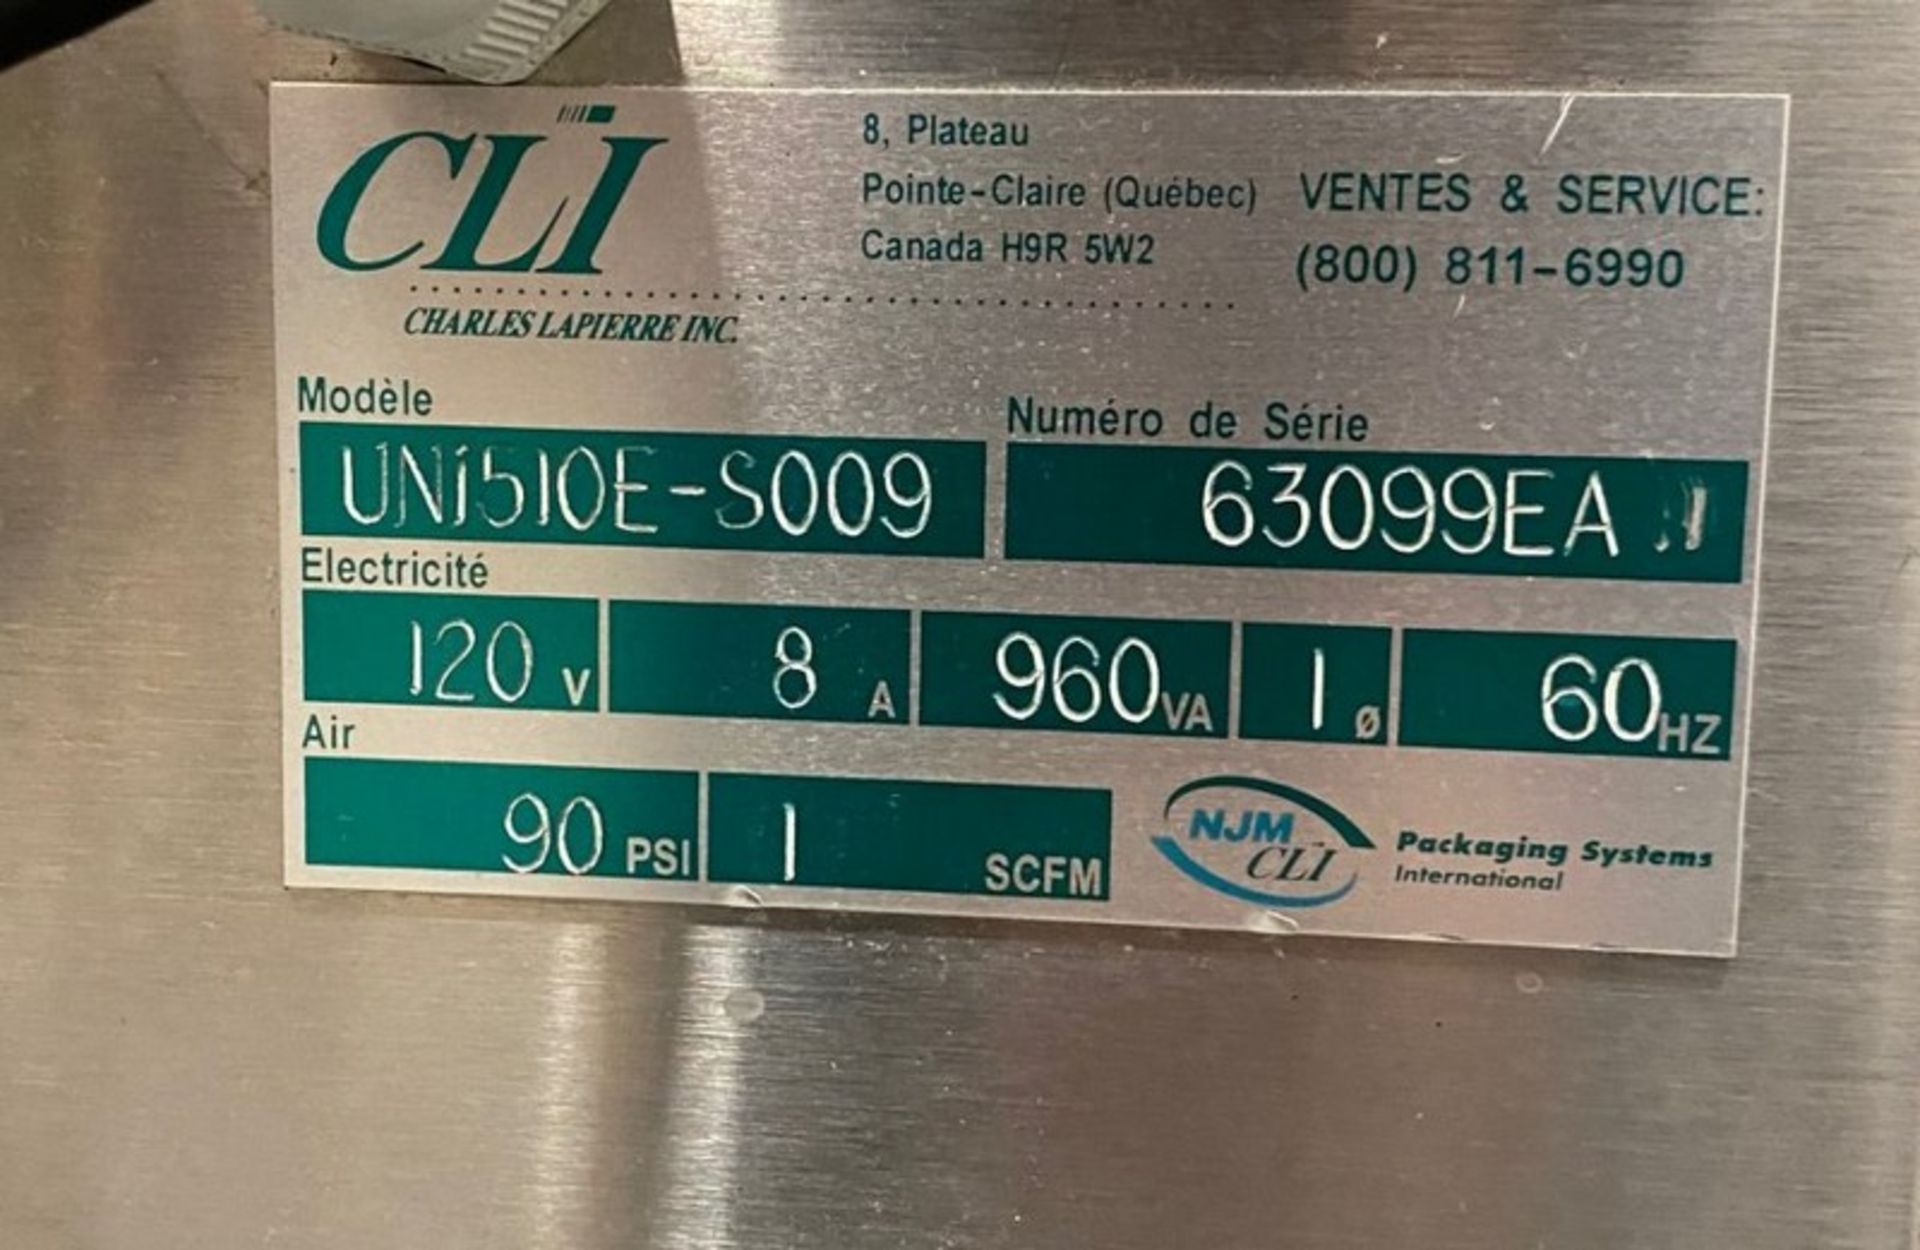 NJM CLI Labeler. Model: UNI510E-S009, Serial: 63099EA.1, 120 Volts, 60 Hz, Single Phase, 90 PSI. - Image 6 of 6